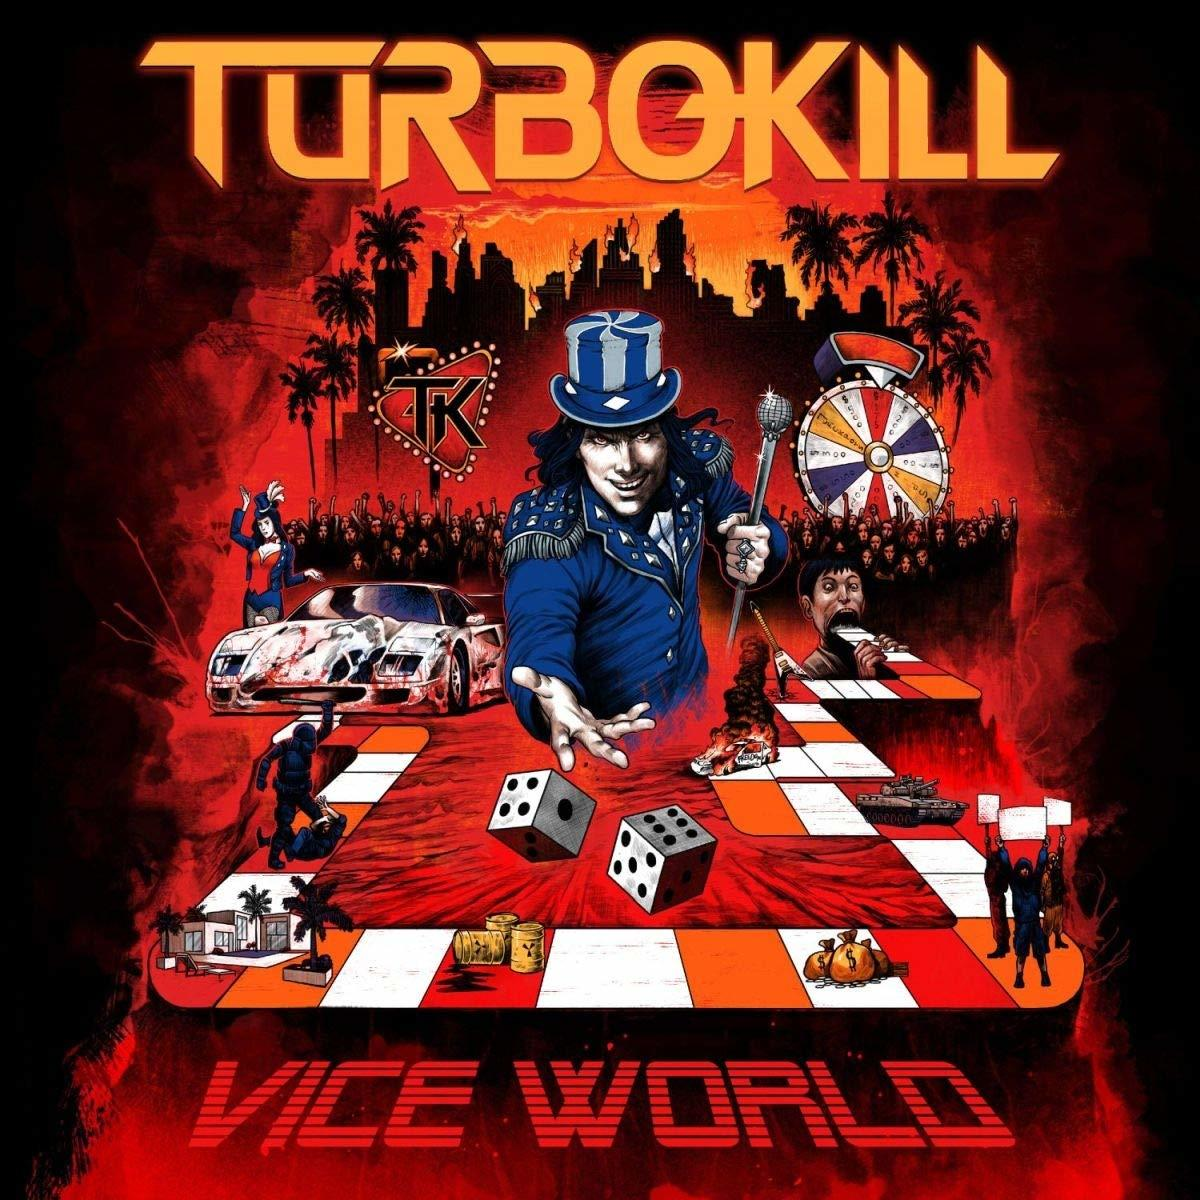 + Bonus-CD) World (LP Vice - - Turbokill